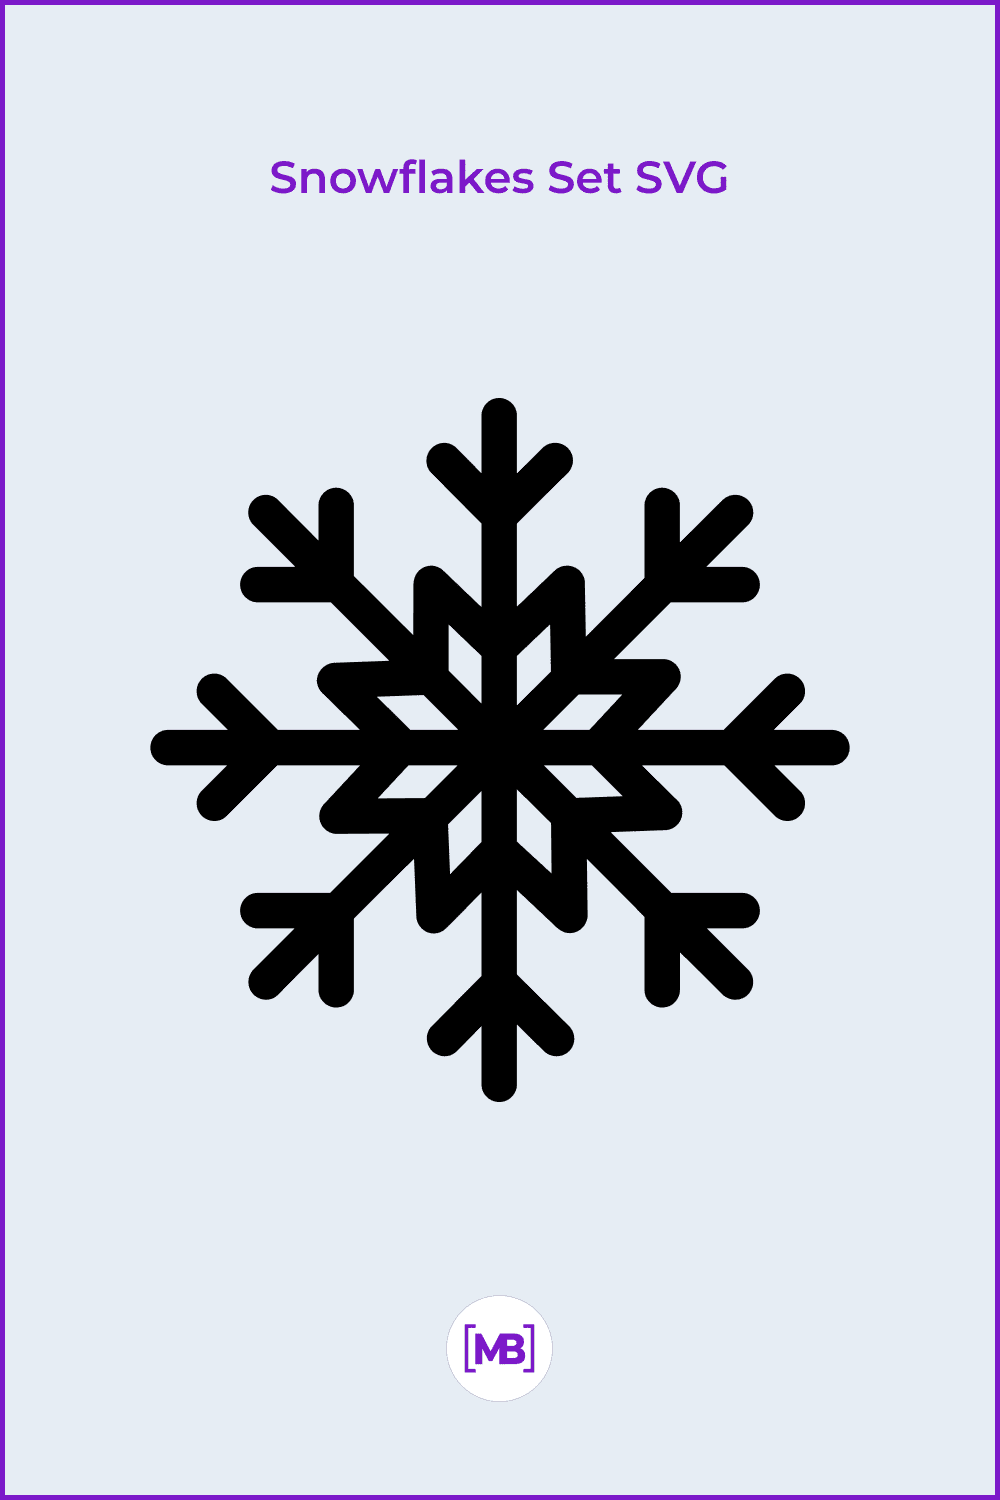 Snowflakes Set SVG.